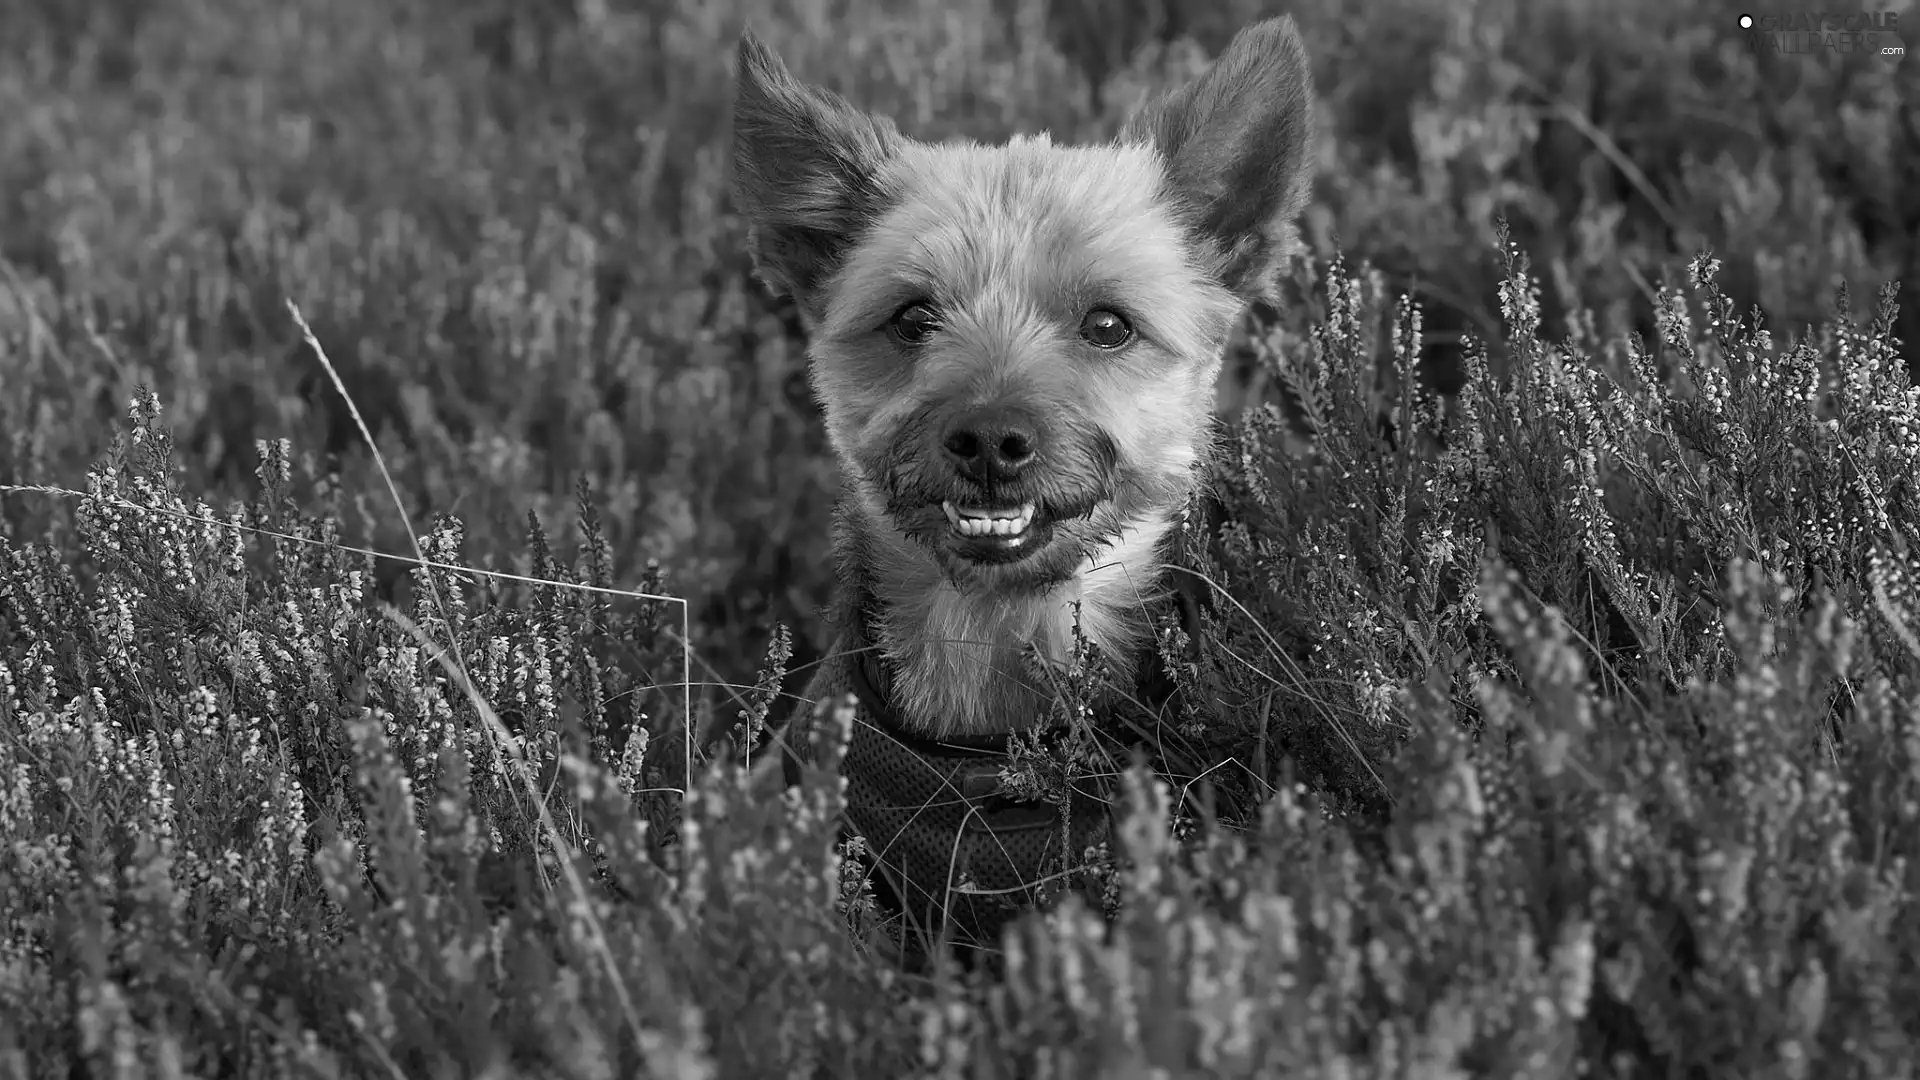 heathers, dog, Yorkshire Terrier